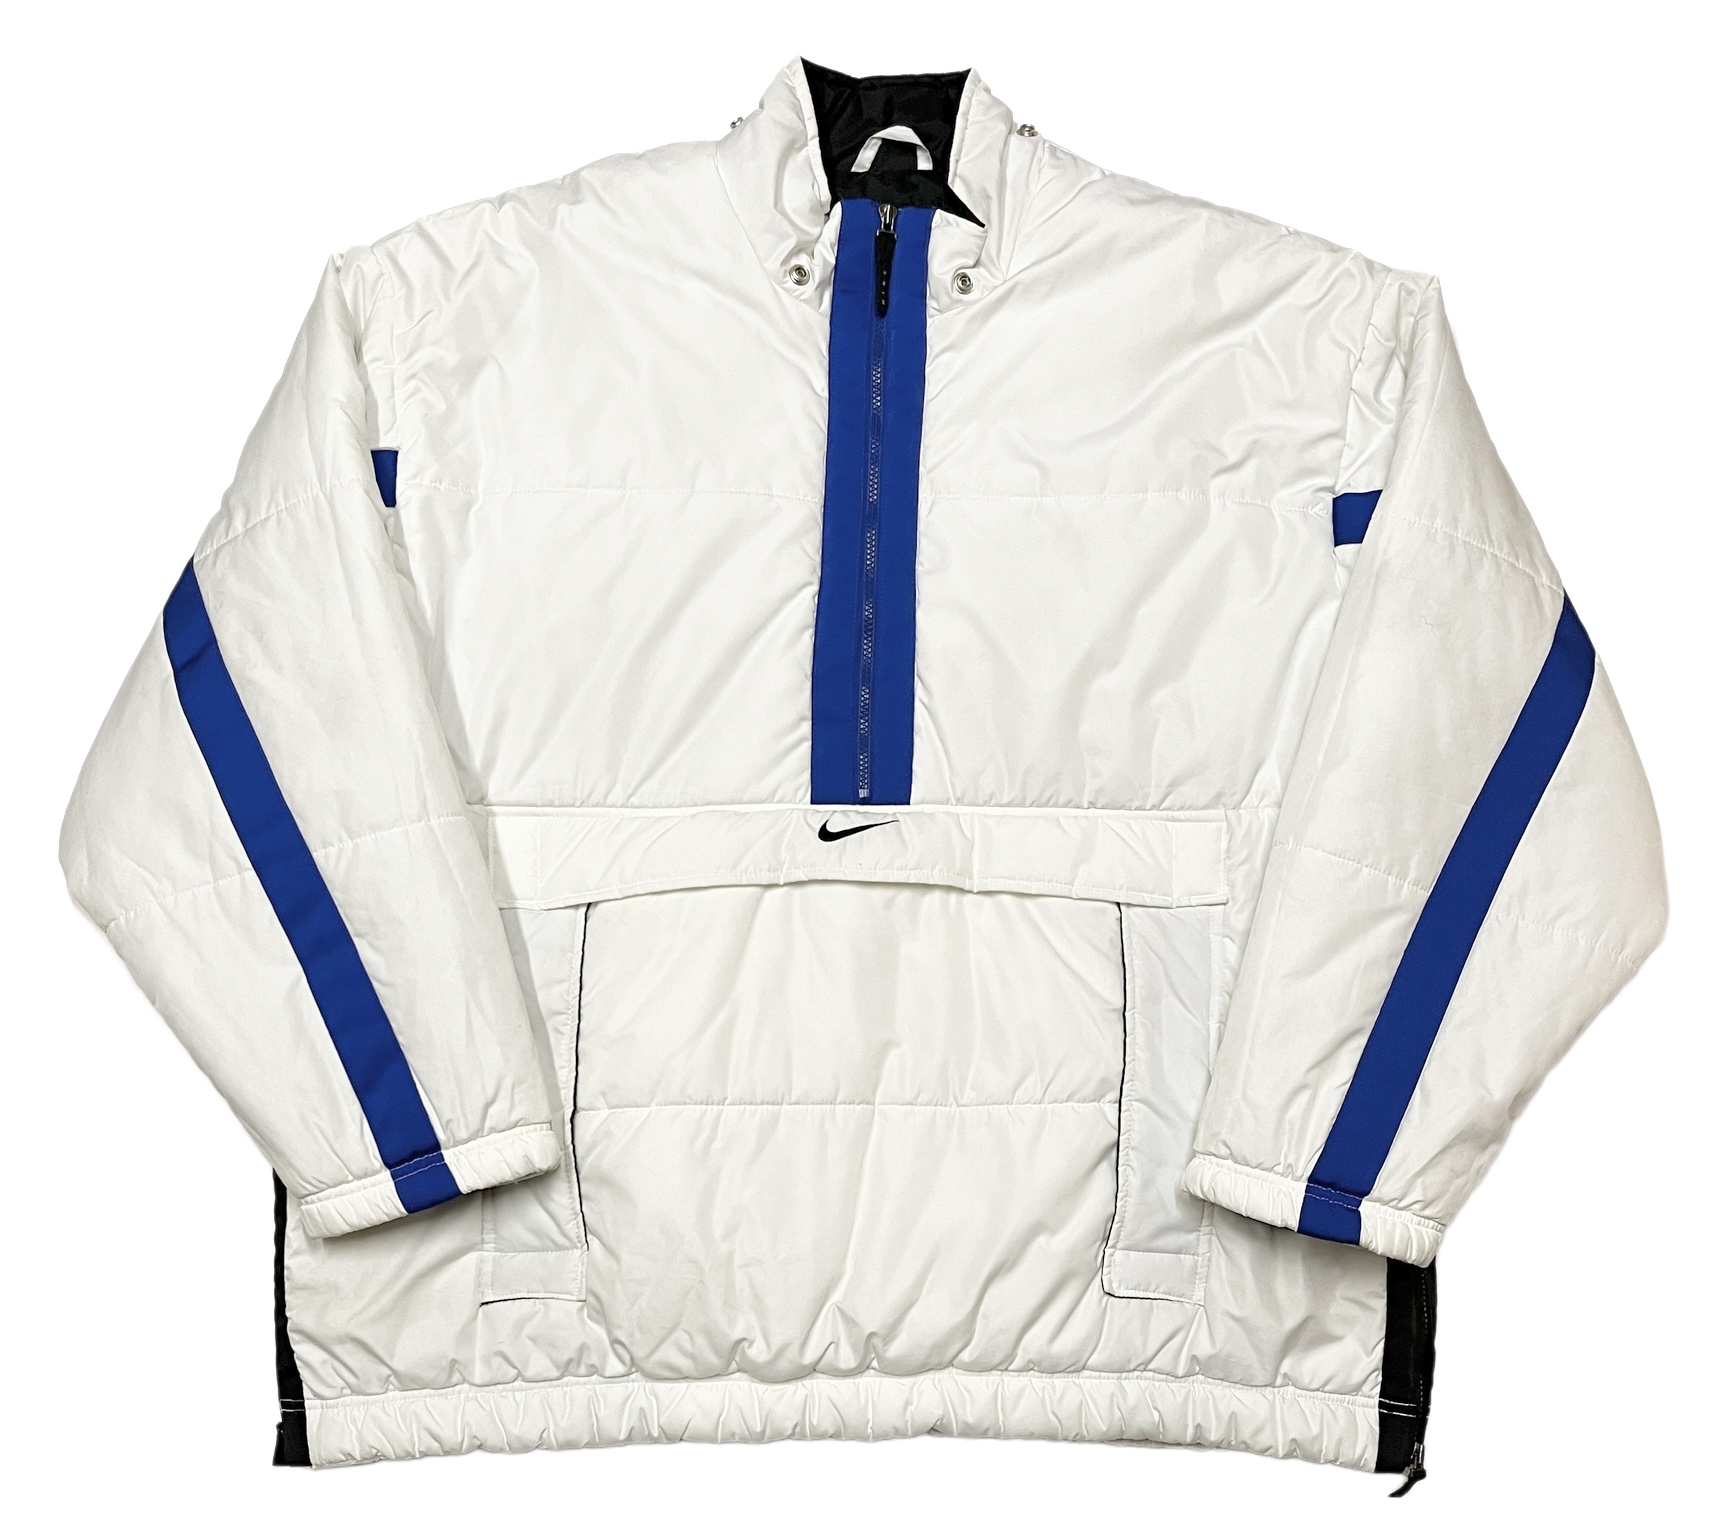 Nike half zip mid season jacket - Lowkey Archives